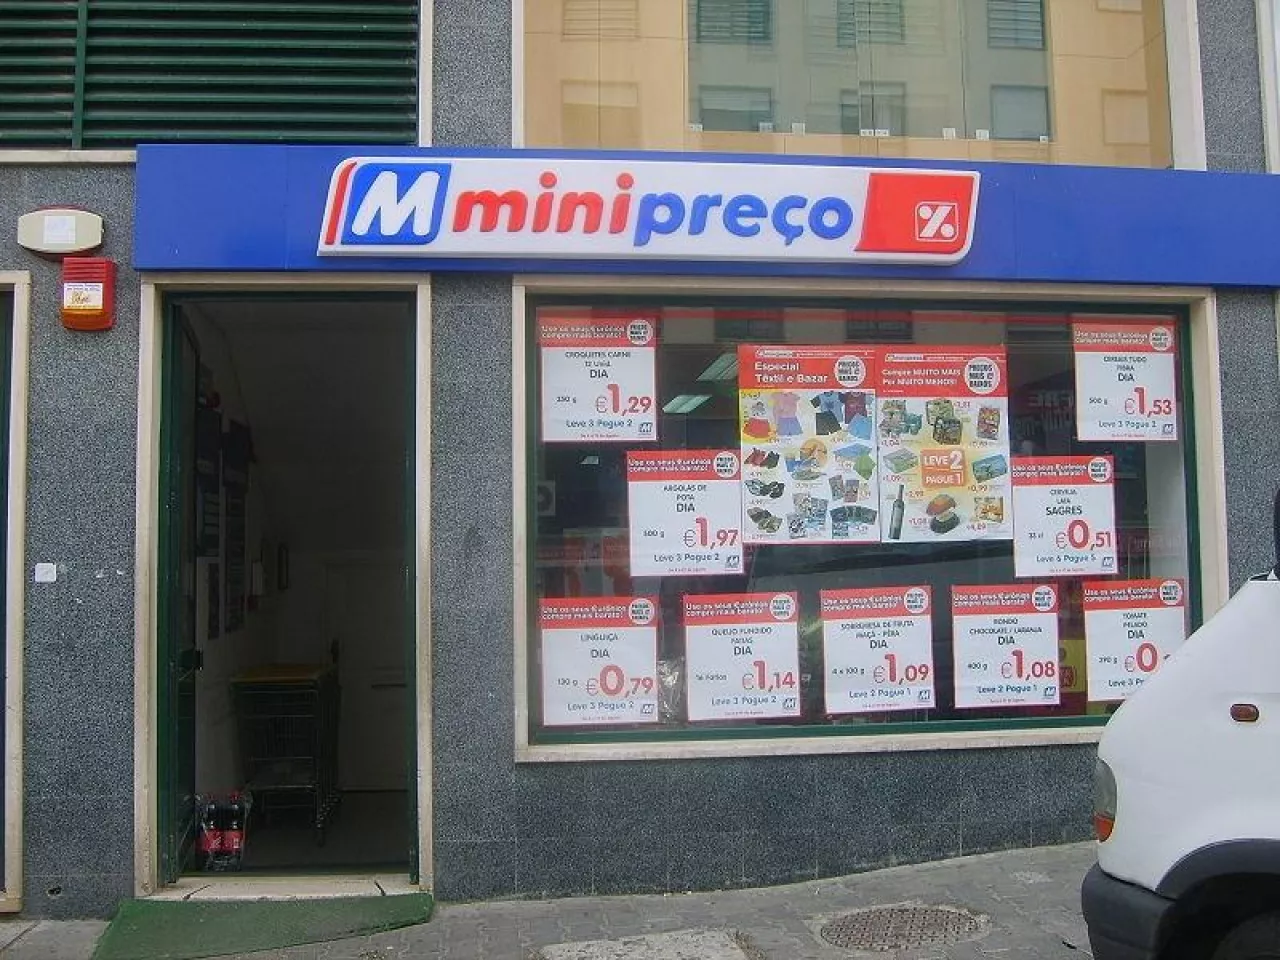 Sklep Minipreco (fot. fot. na lic. CC BY-SA 3.0)